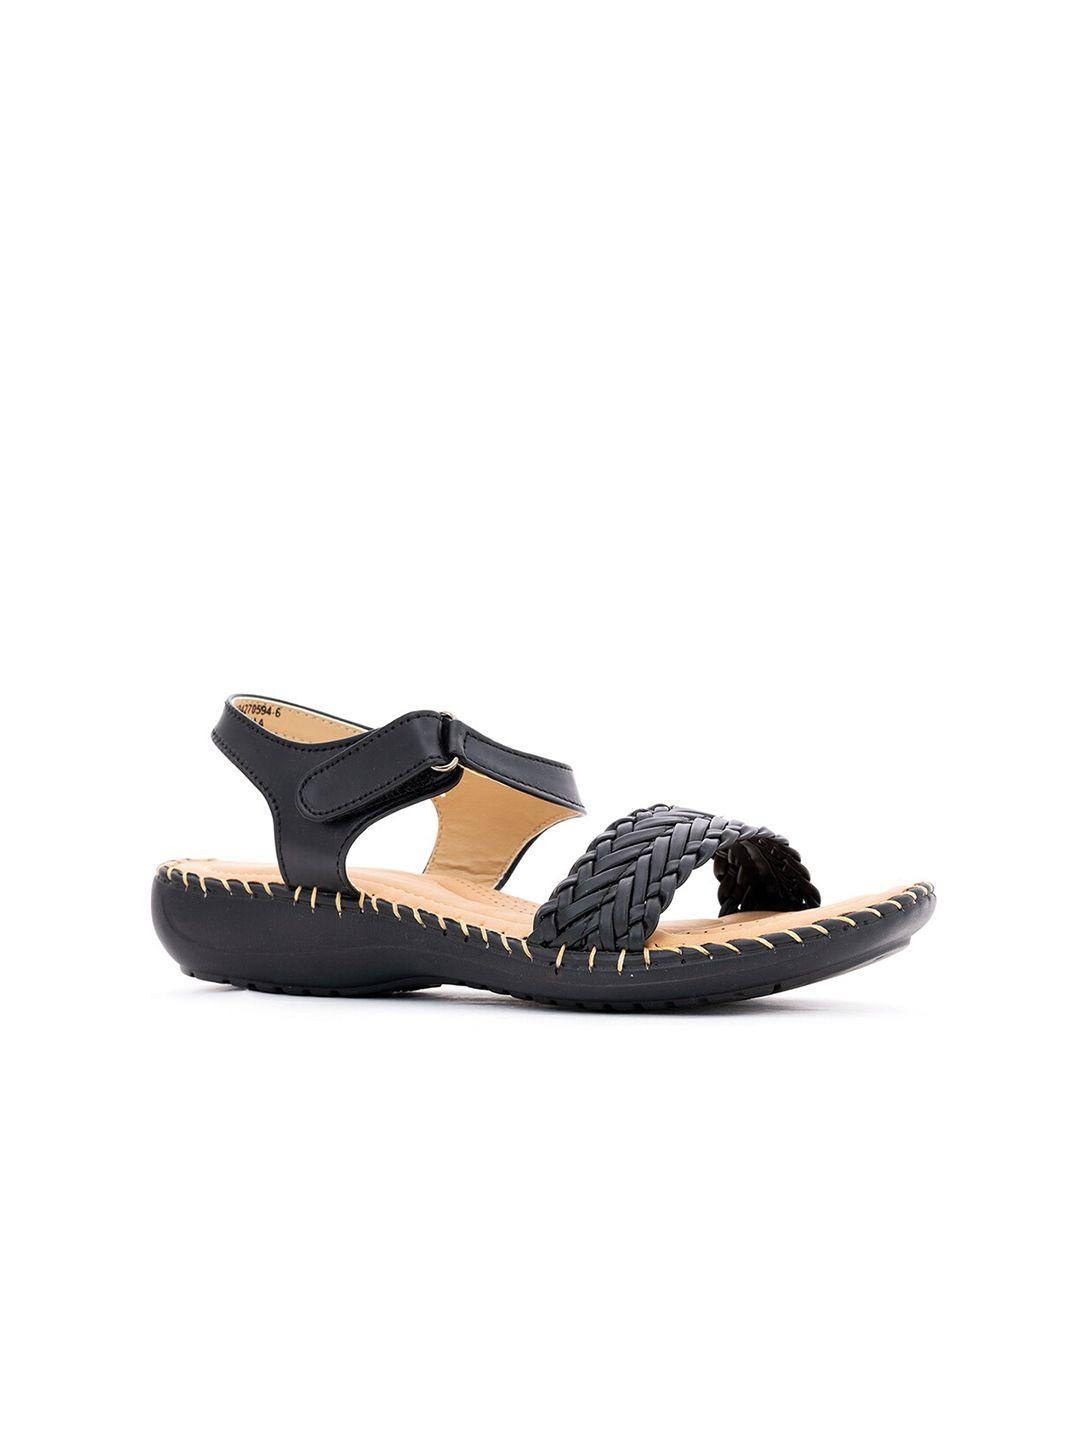 khadims women black textured open toe flats